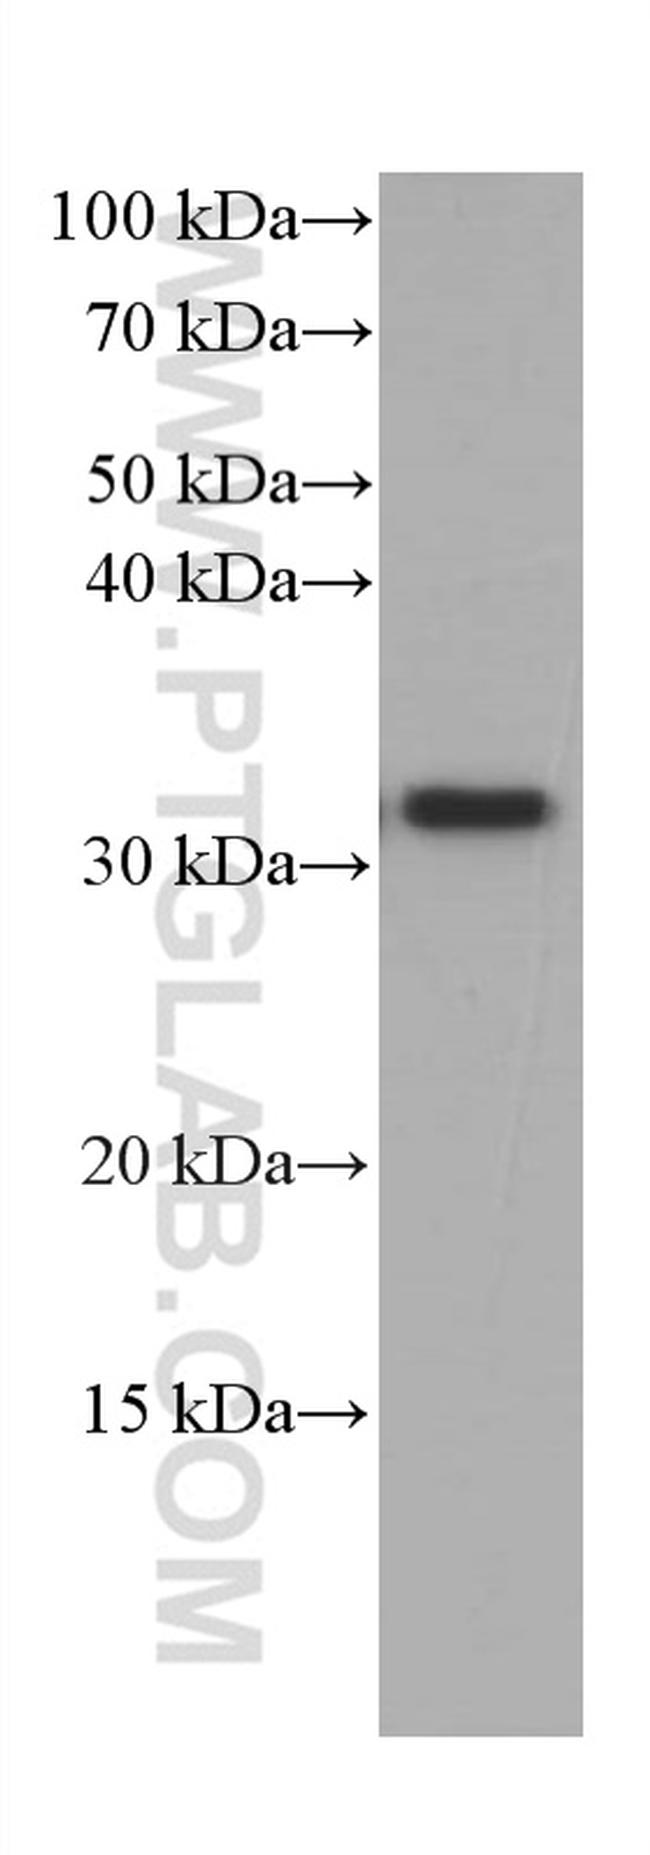 CD40L/CD154 Antibody in Western Blot (WB)